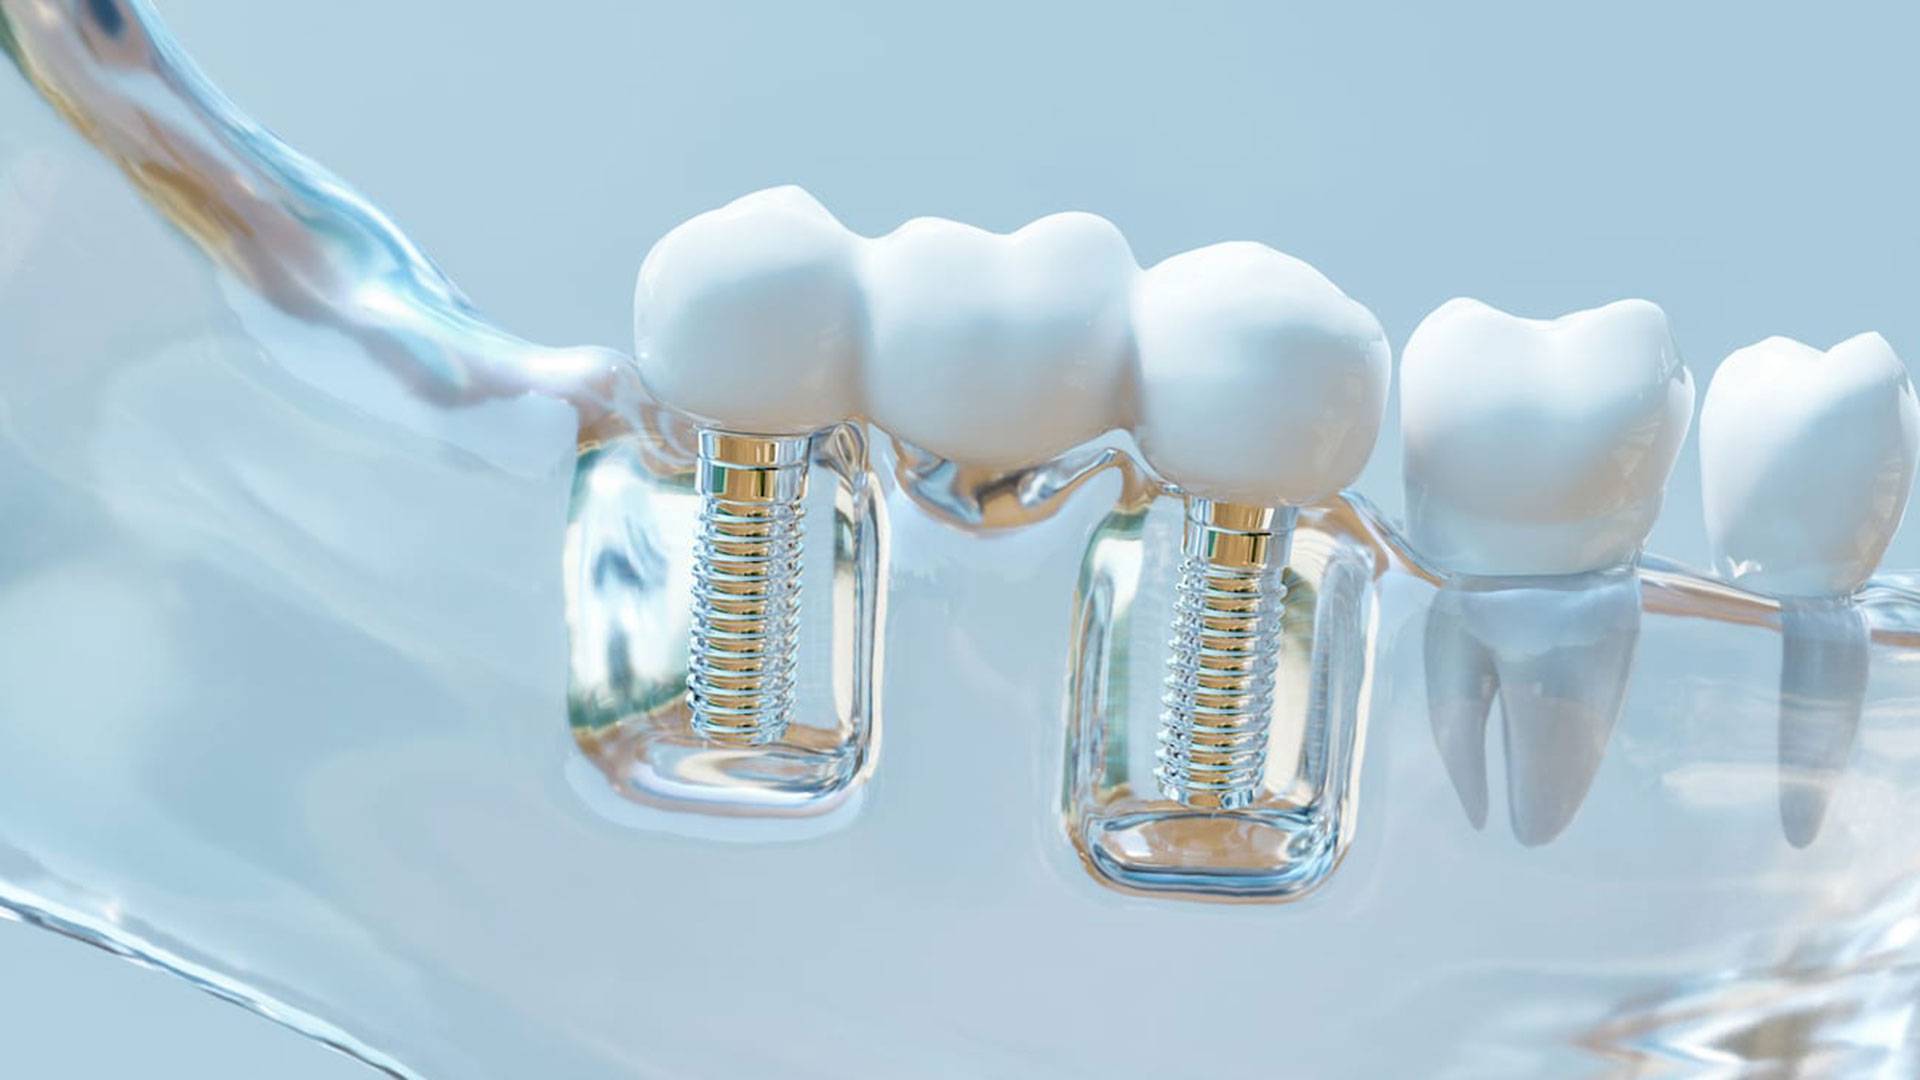 Dental And Denture Care Center, Spring Hill, Dental Crown Implant